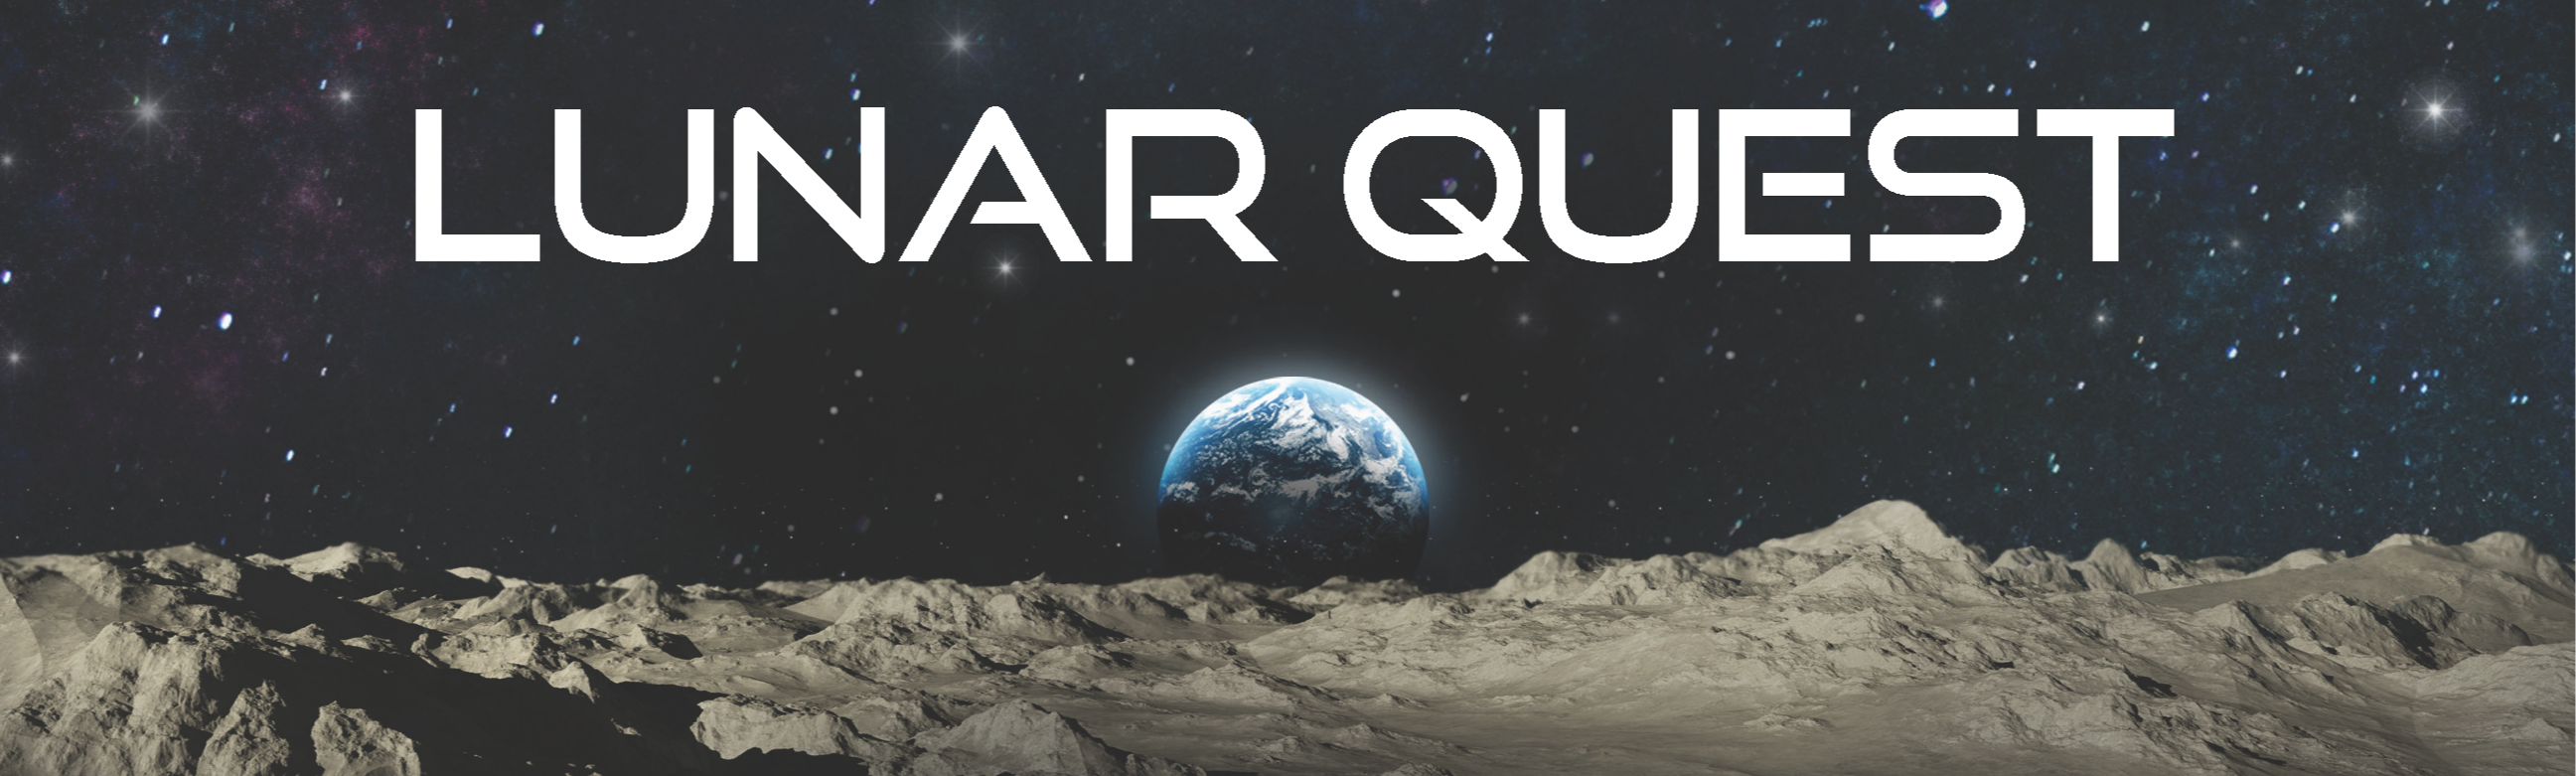 Lunar Quest